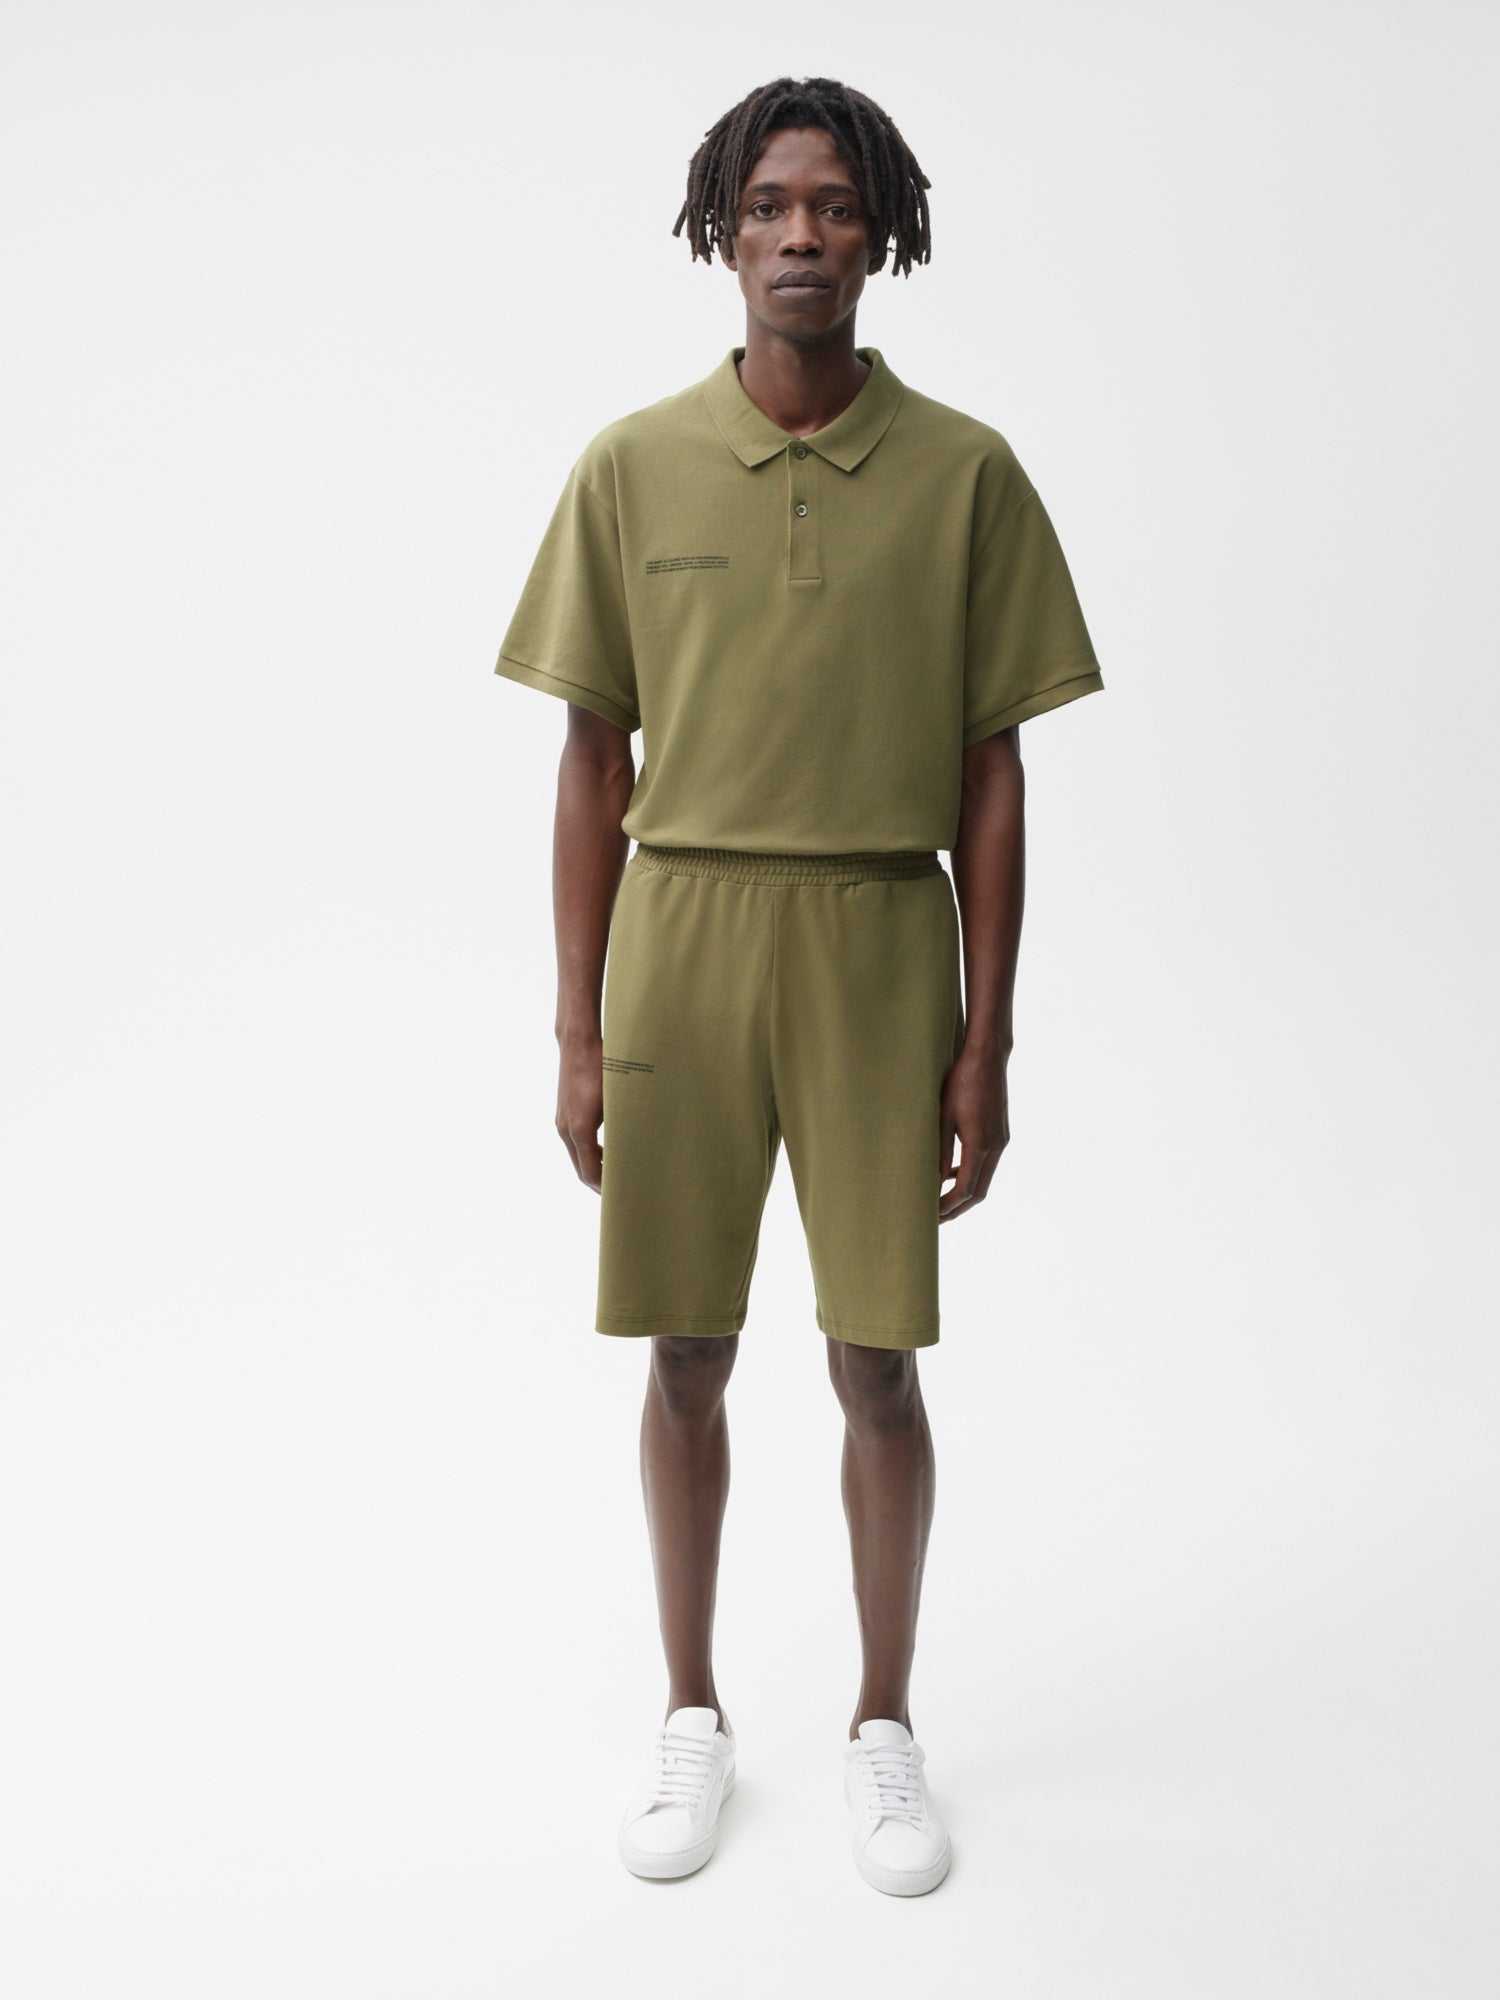 Organic Cotton Pique Shorts Olive Male Model